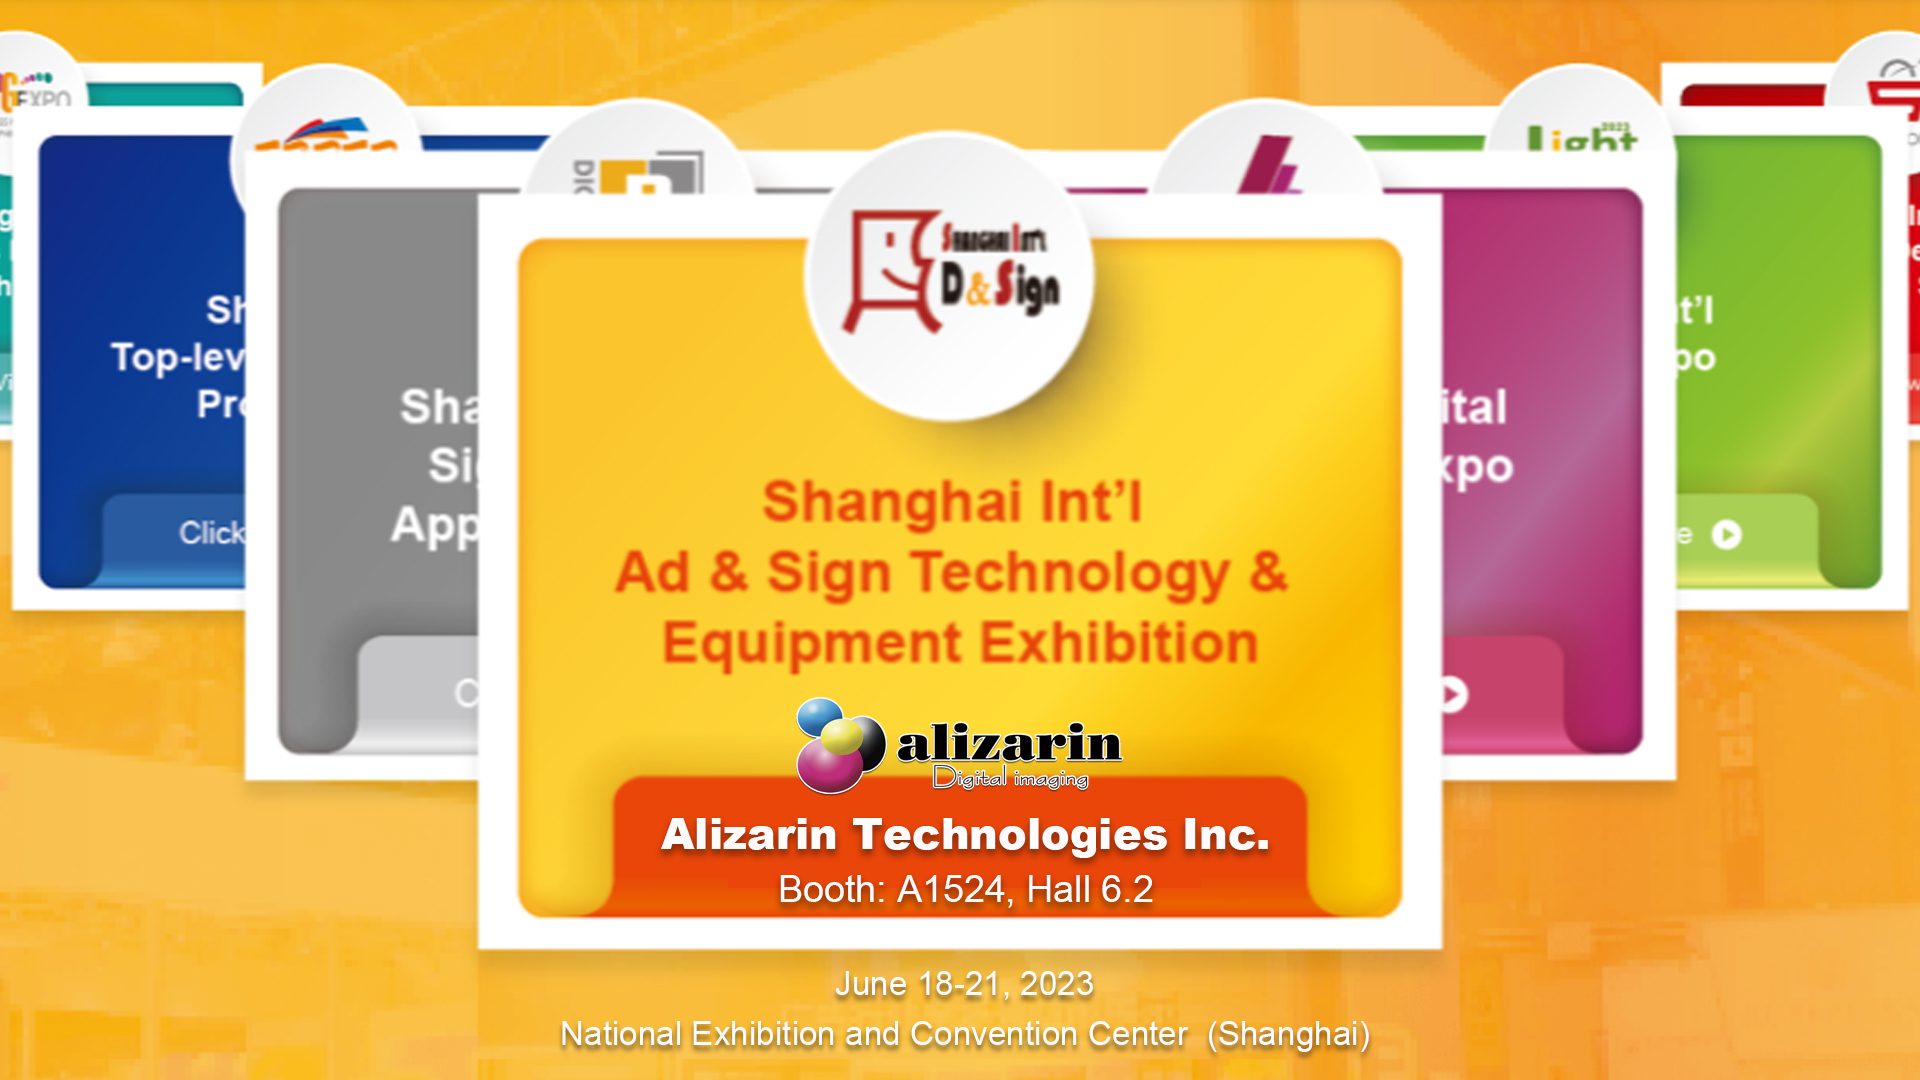 Gratam visitare Alizarin Technologies Inc. De APPP EXPO MMXXIII, Shanghai